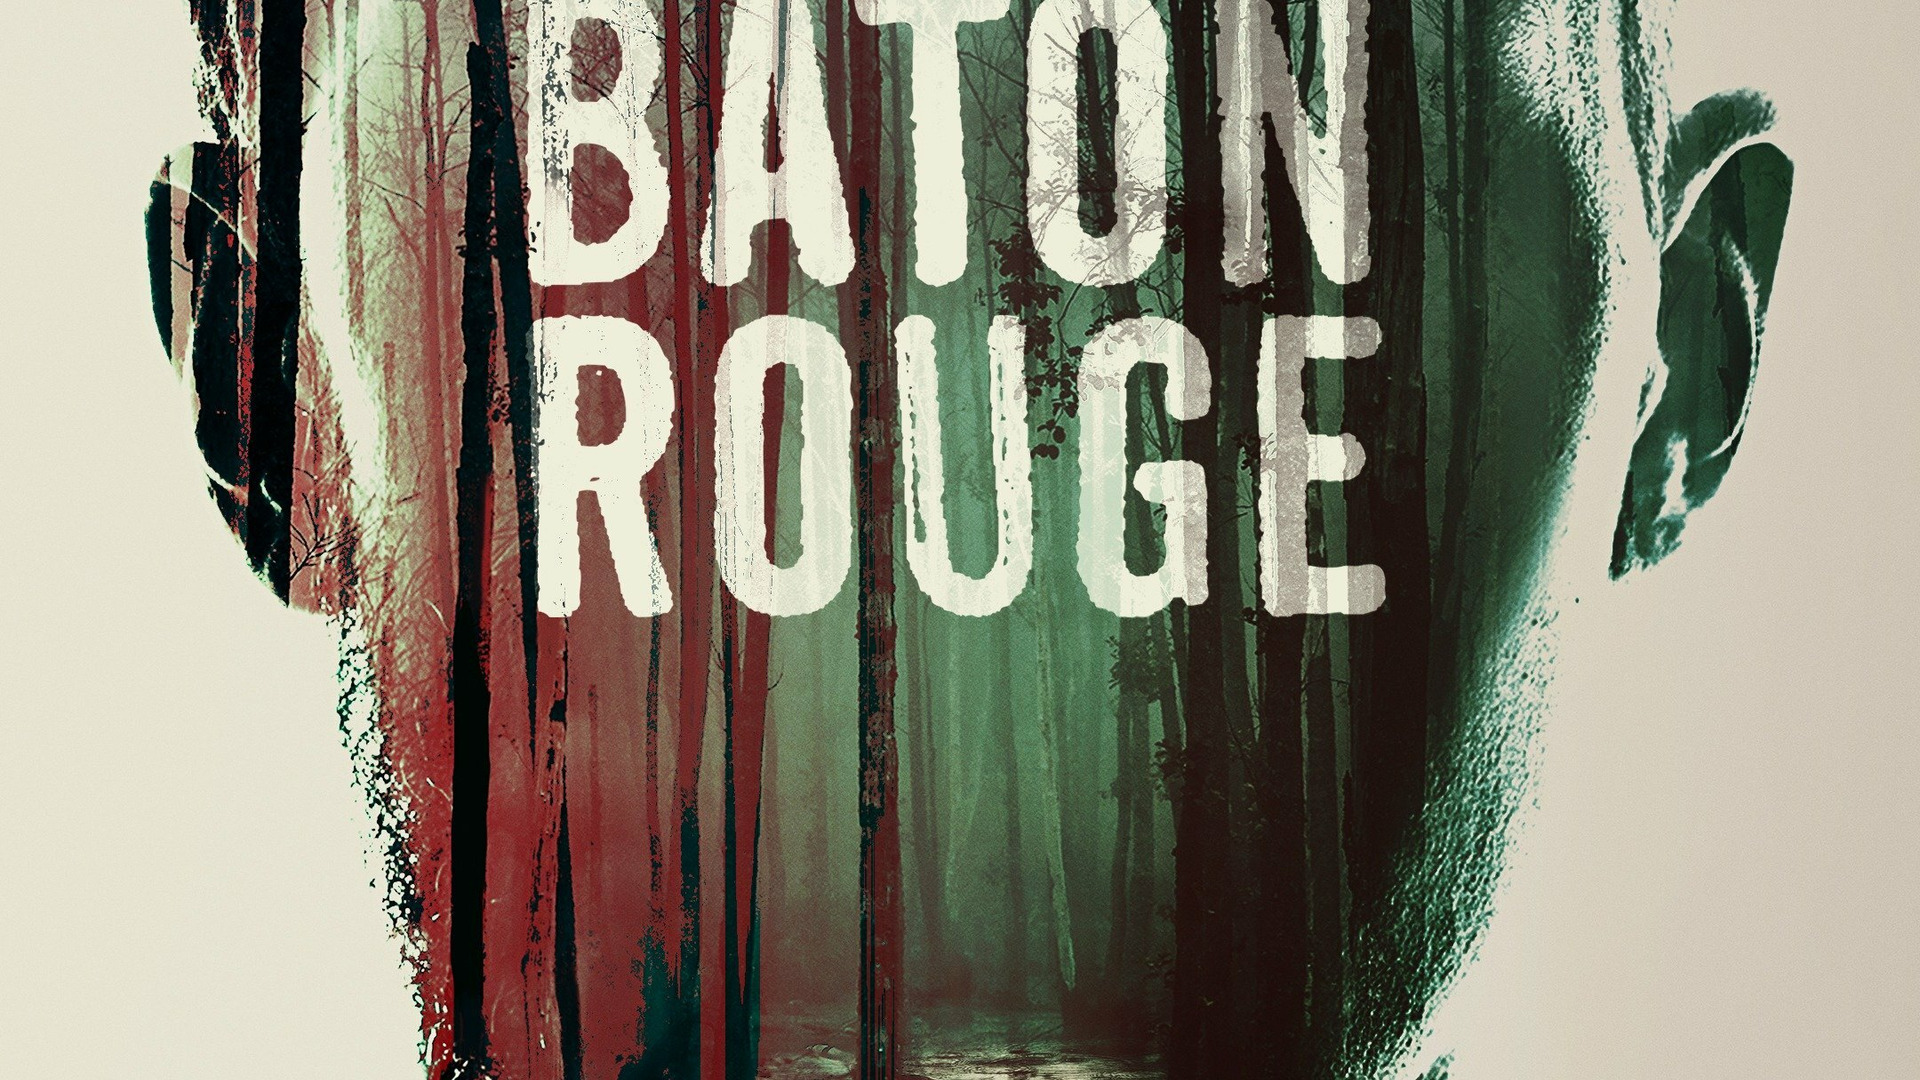 Show Serial Killer Capital: Baton Rouge